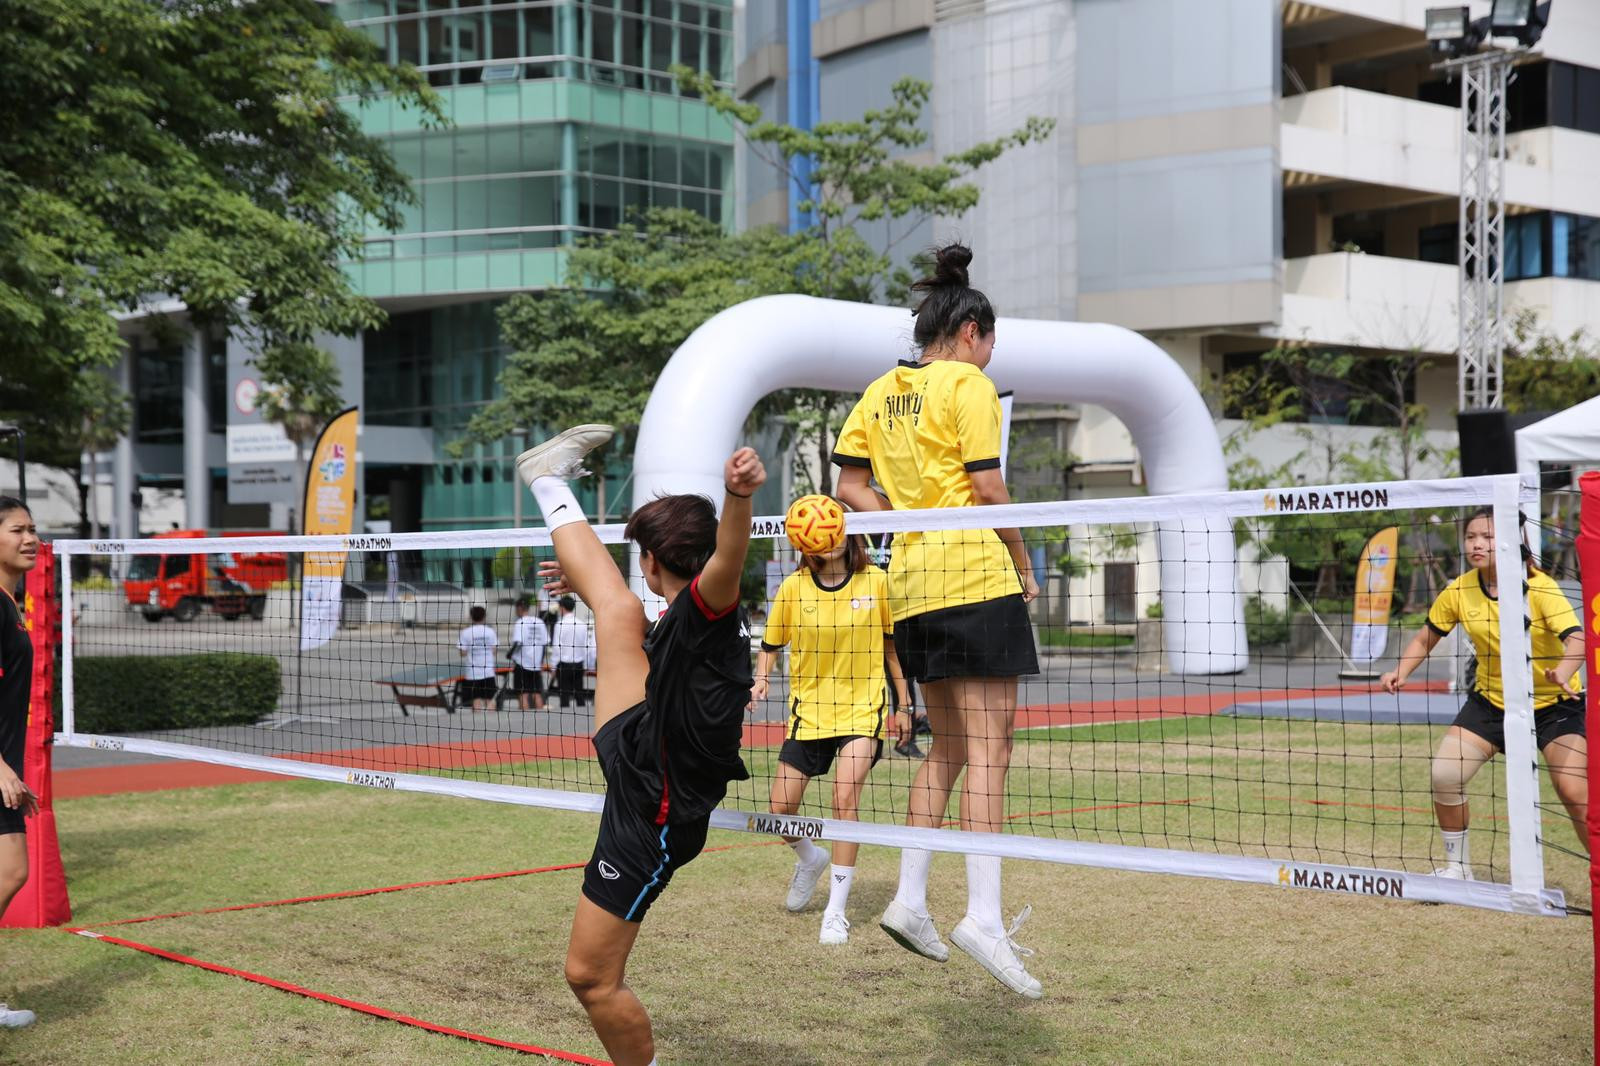 Bangkokthonburi University teams grabbed the top prizes in sepak takraw ©UTS